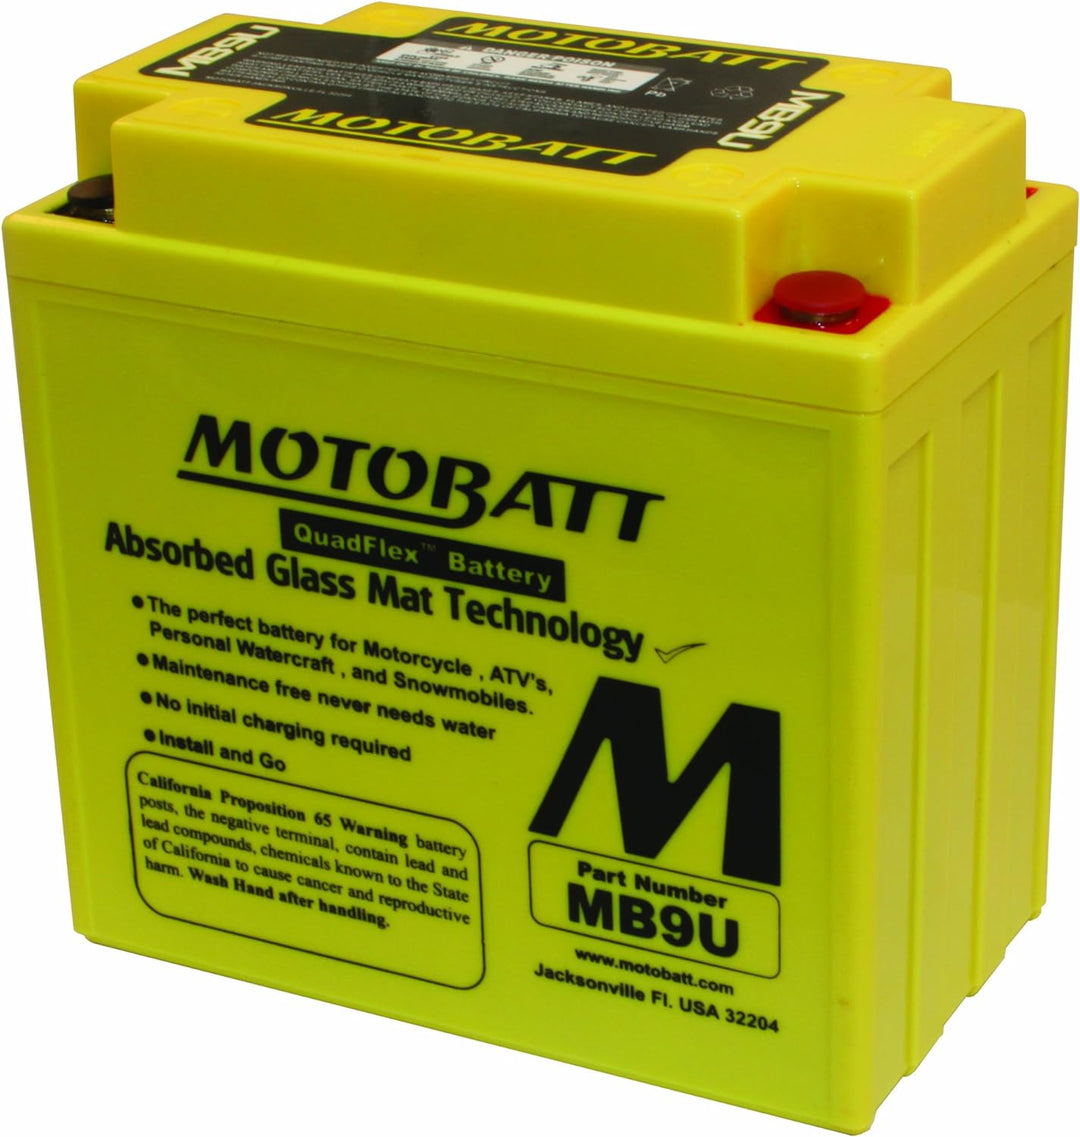 12V MC Battery MBTX9U